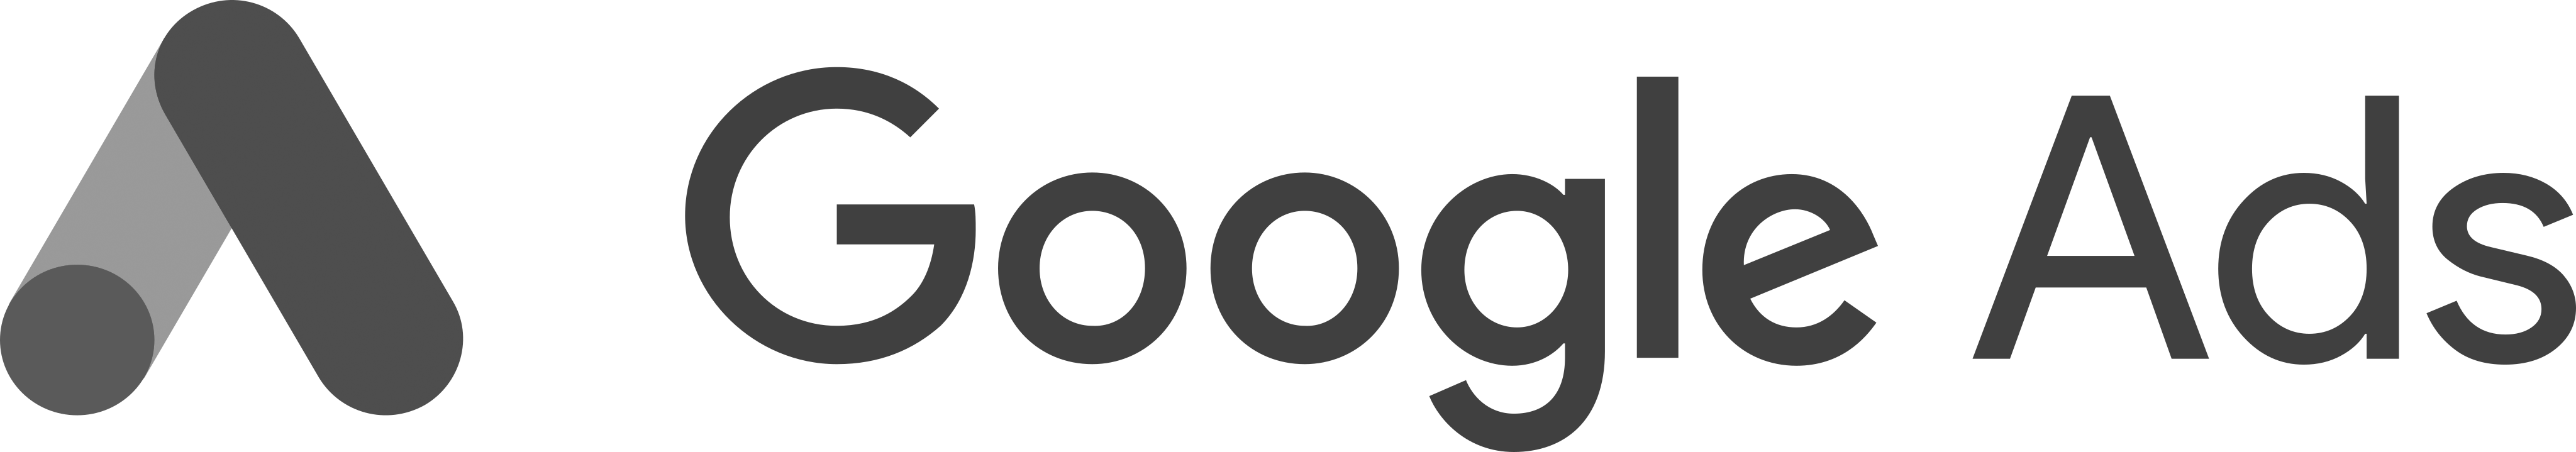 google-adwords-logo-grey